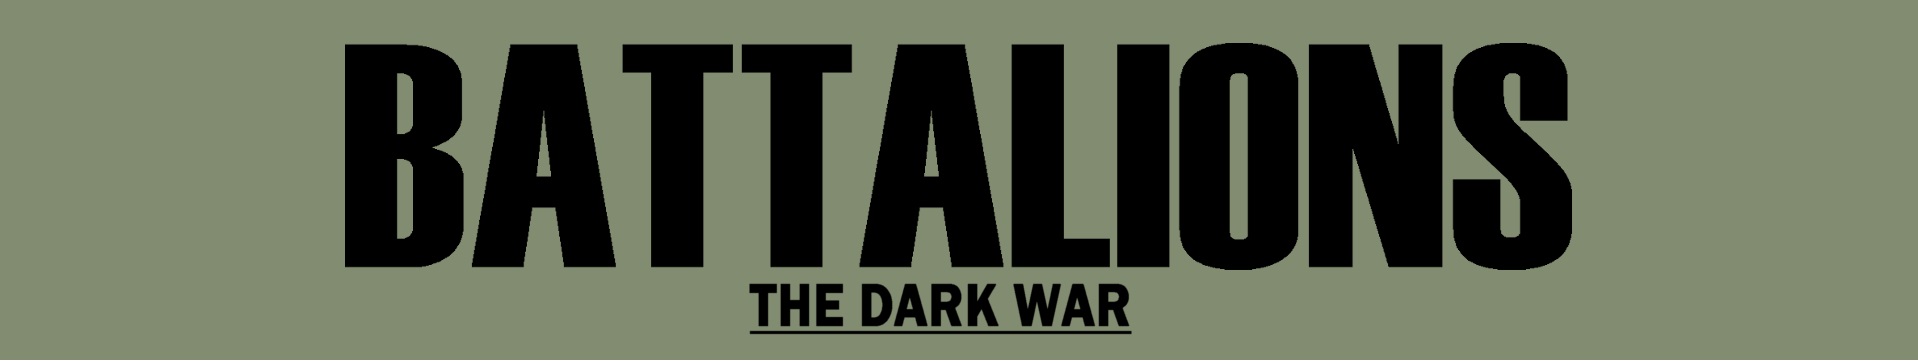 Battalions -The Dark War